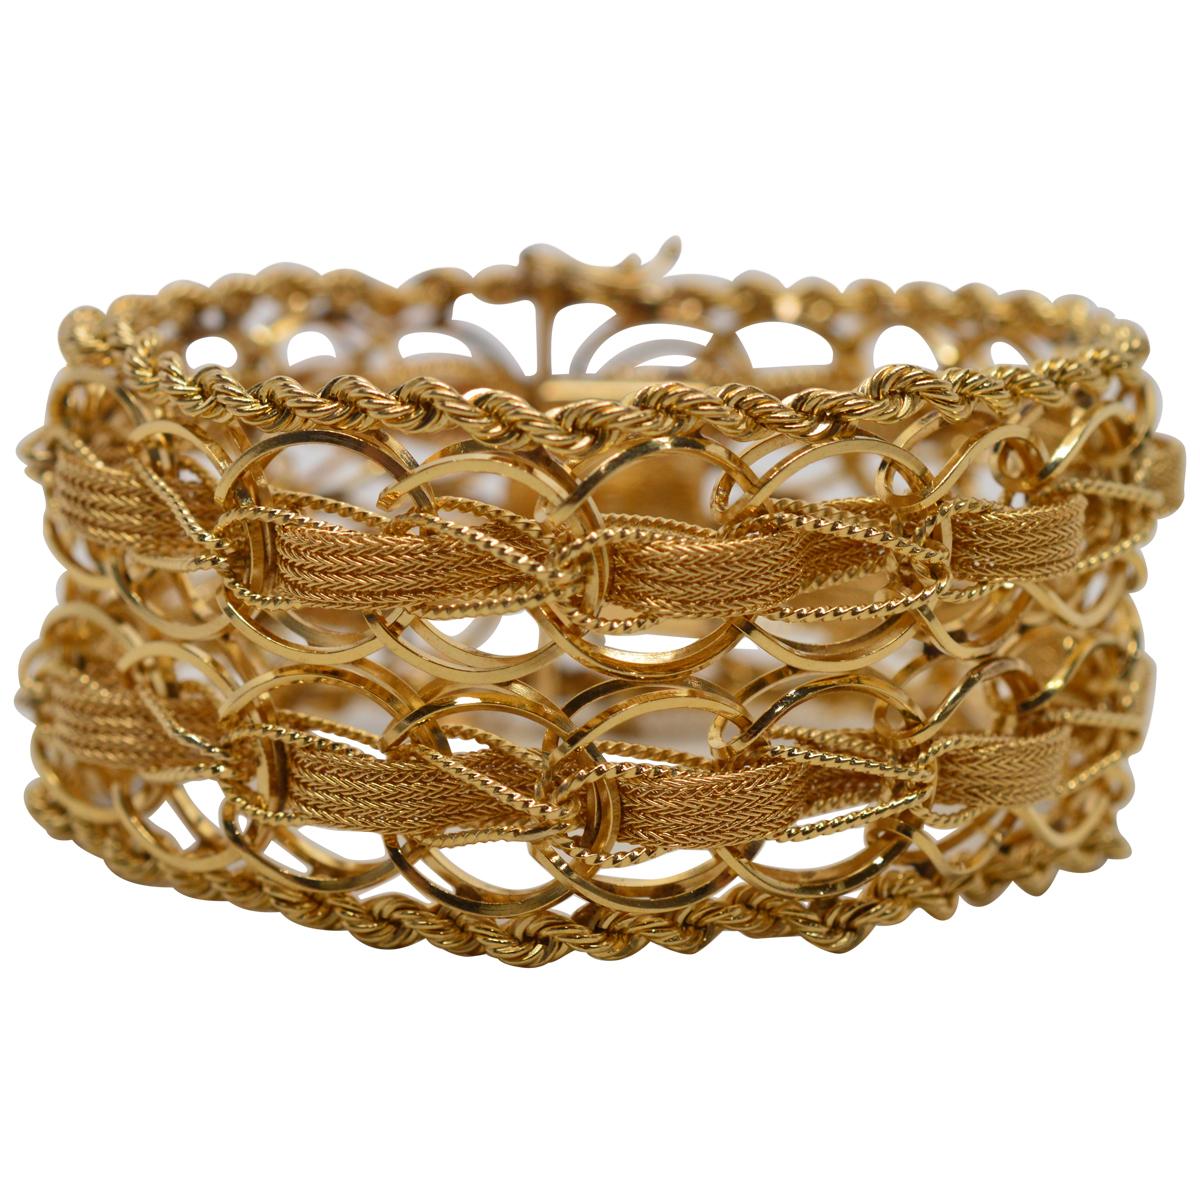  Wide Woven Double Chain Link 14 Karat Yellow Gold Bracelet